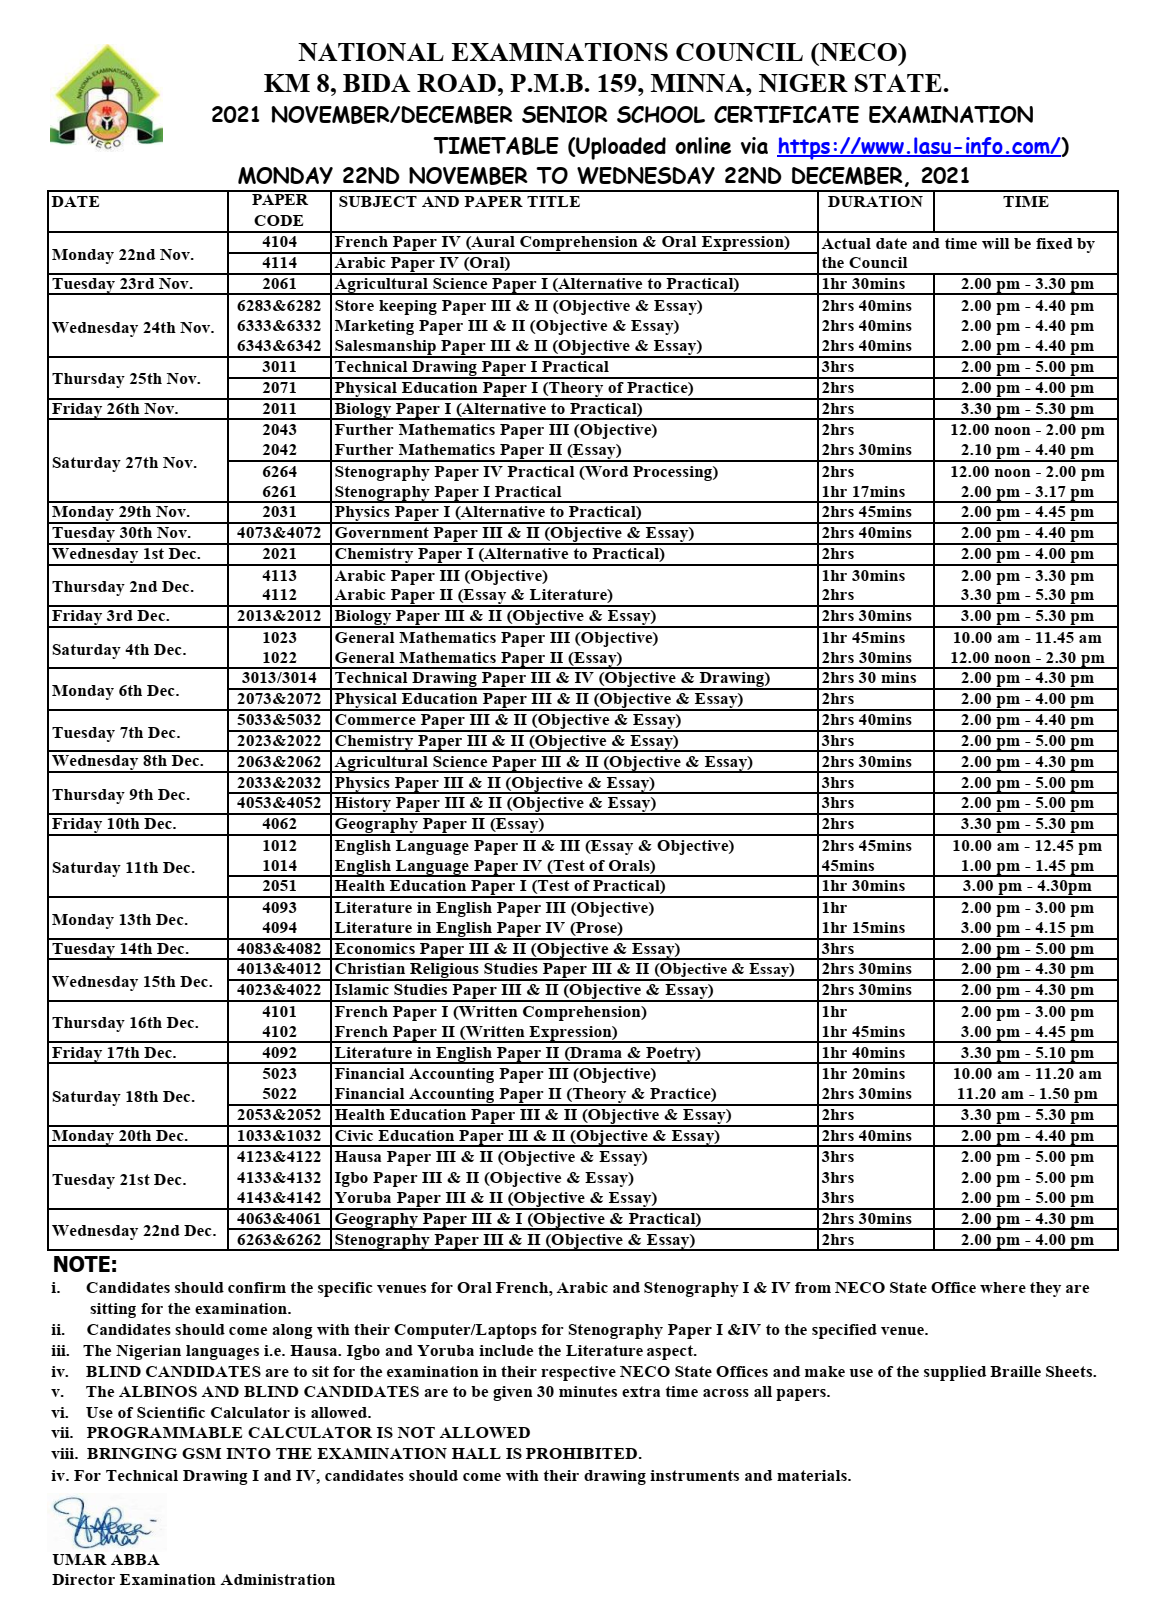 NECO GCE (External) Timetable [22nd Nov - 22nd December 2021]